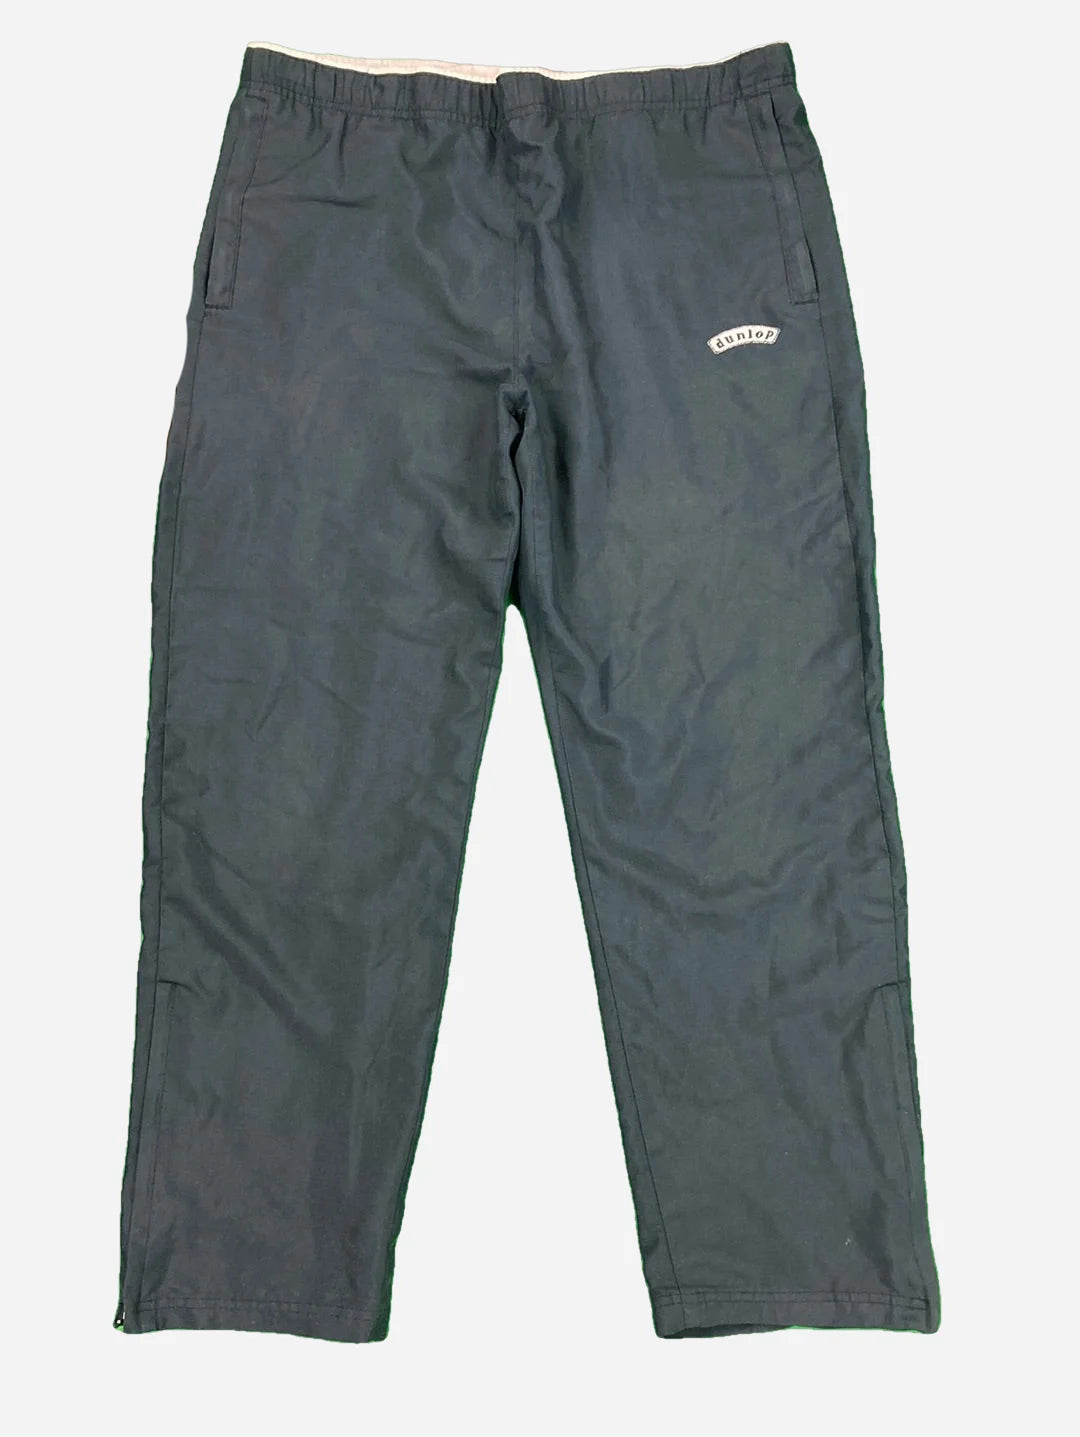 Dunlop Track Pants (M)